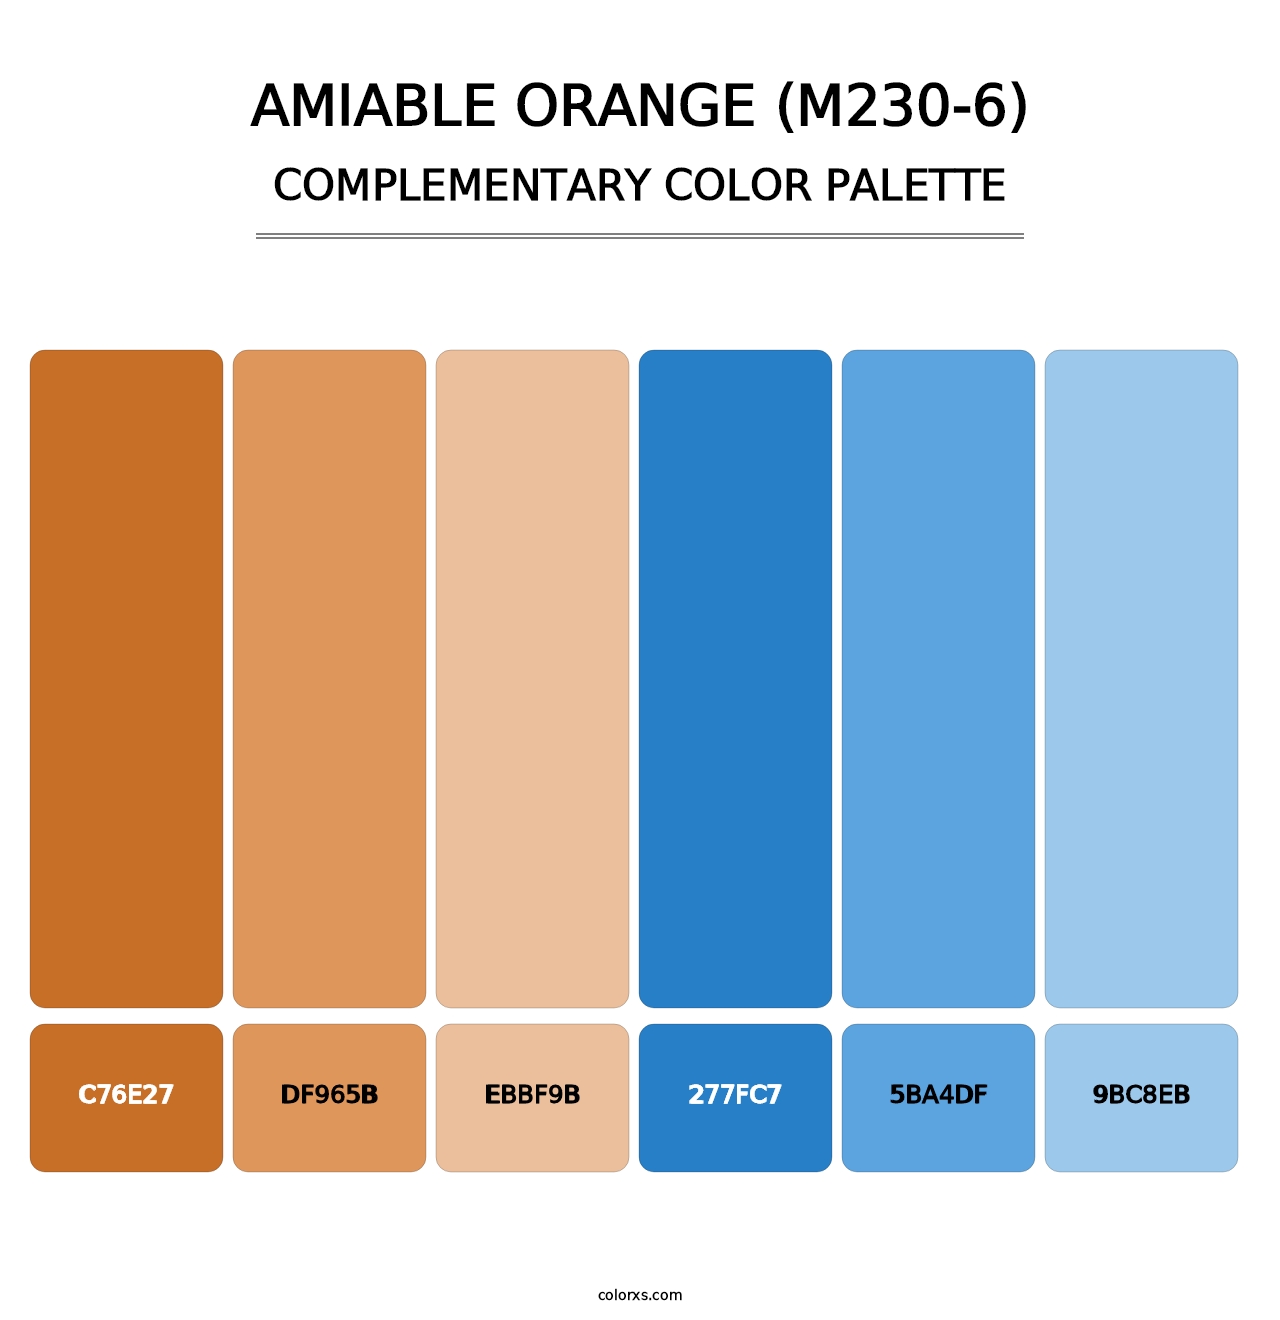 Amiable Orange (M230-6) - Complementary Color Palette